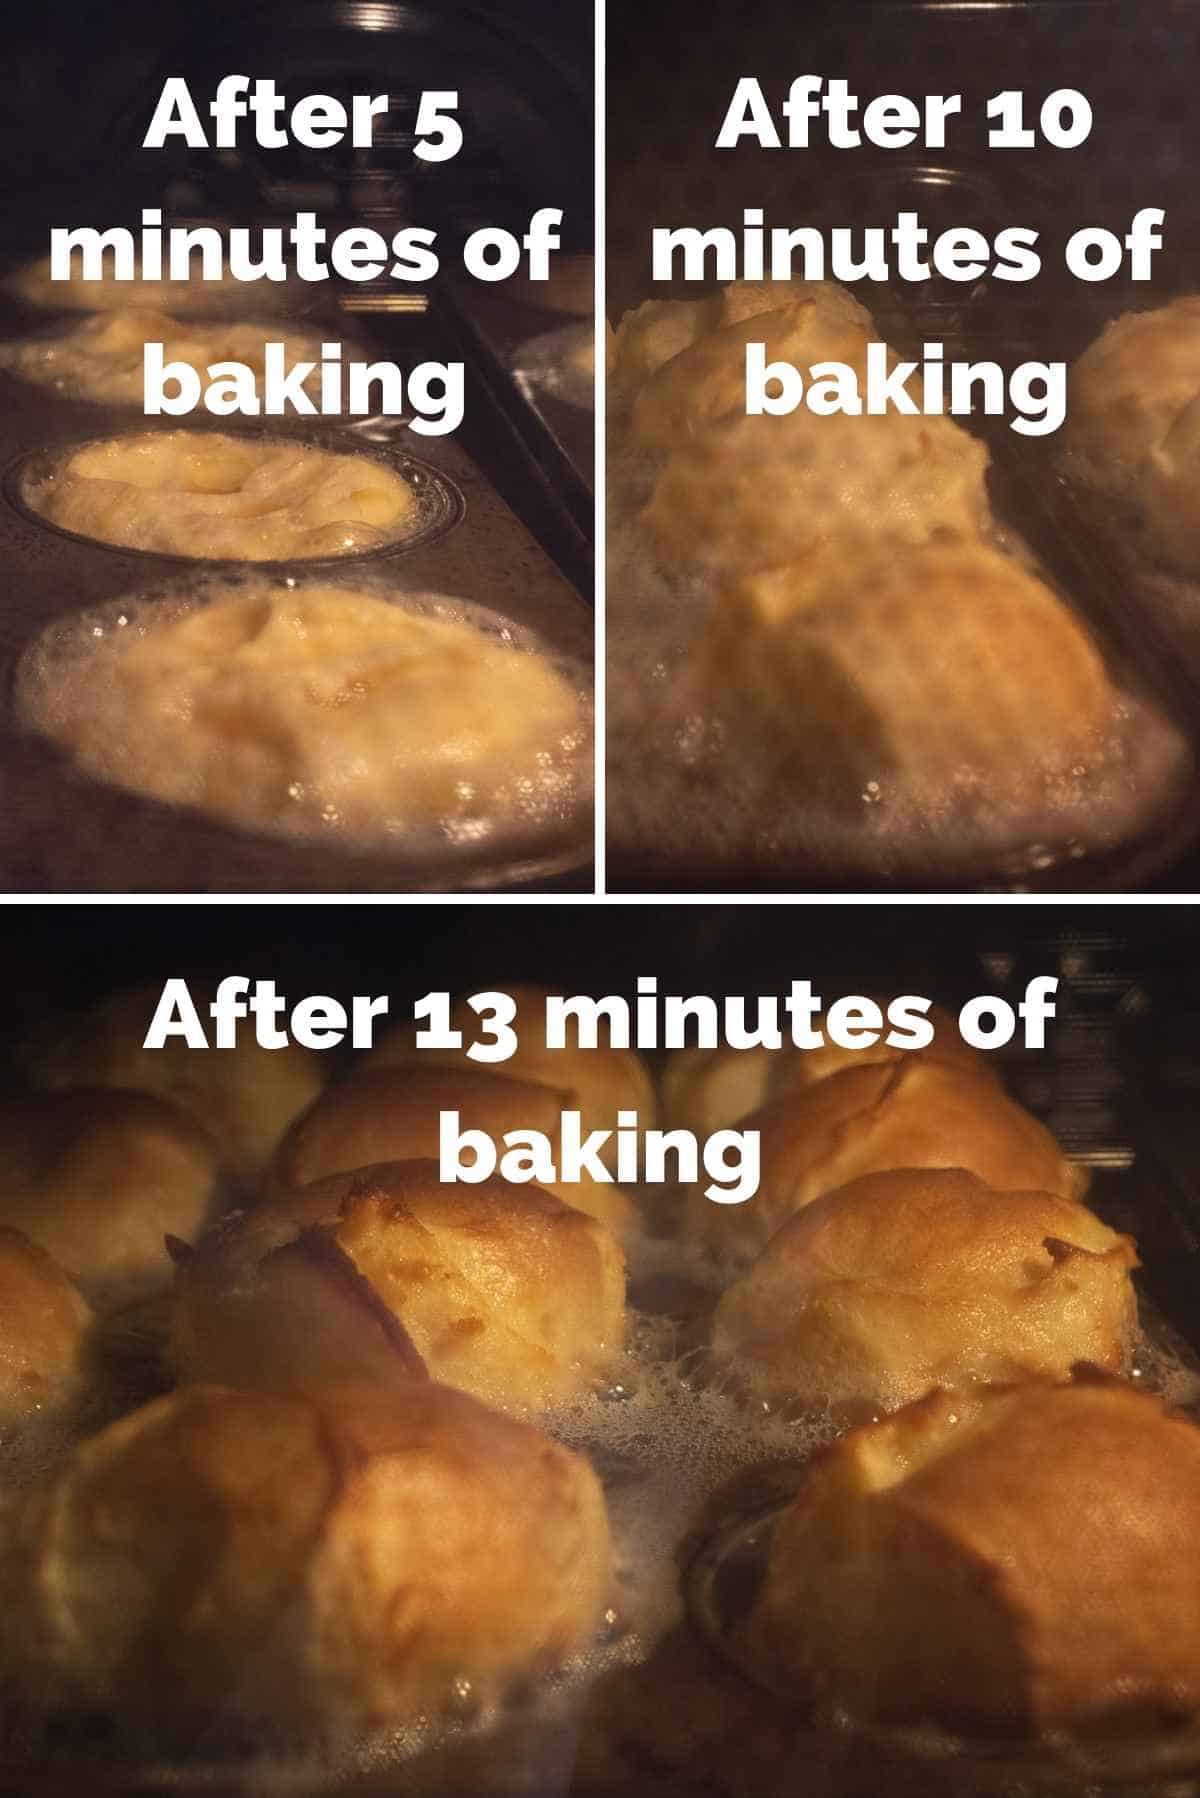 Pics showing progression of baking at 5 minutes, 10 minutes, 13 minutes.